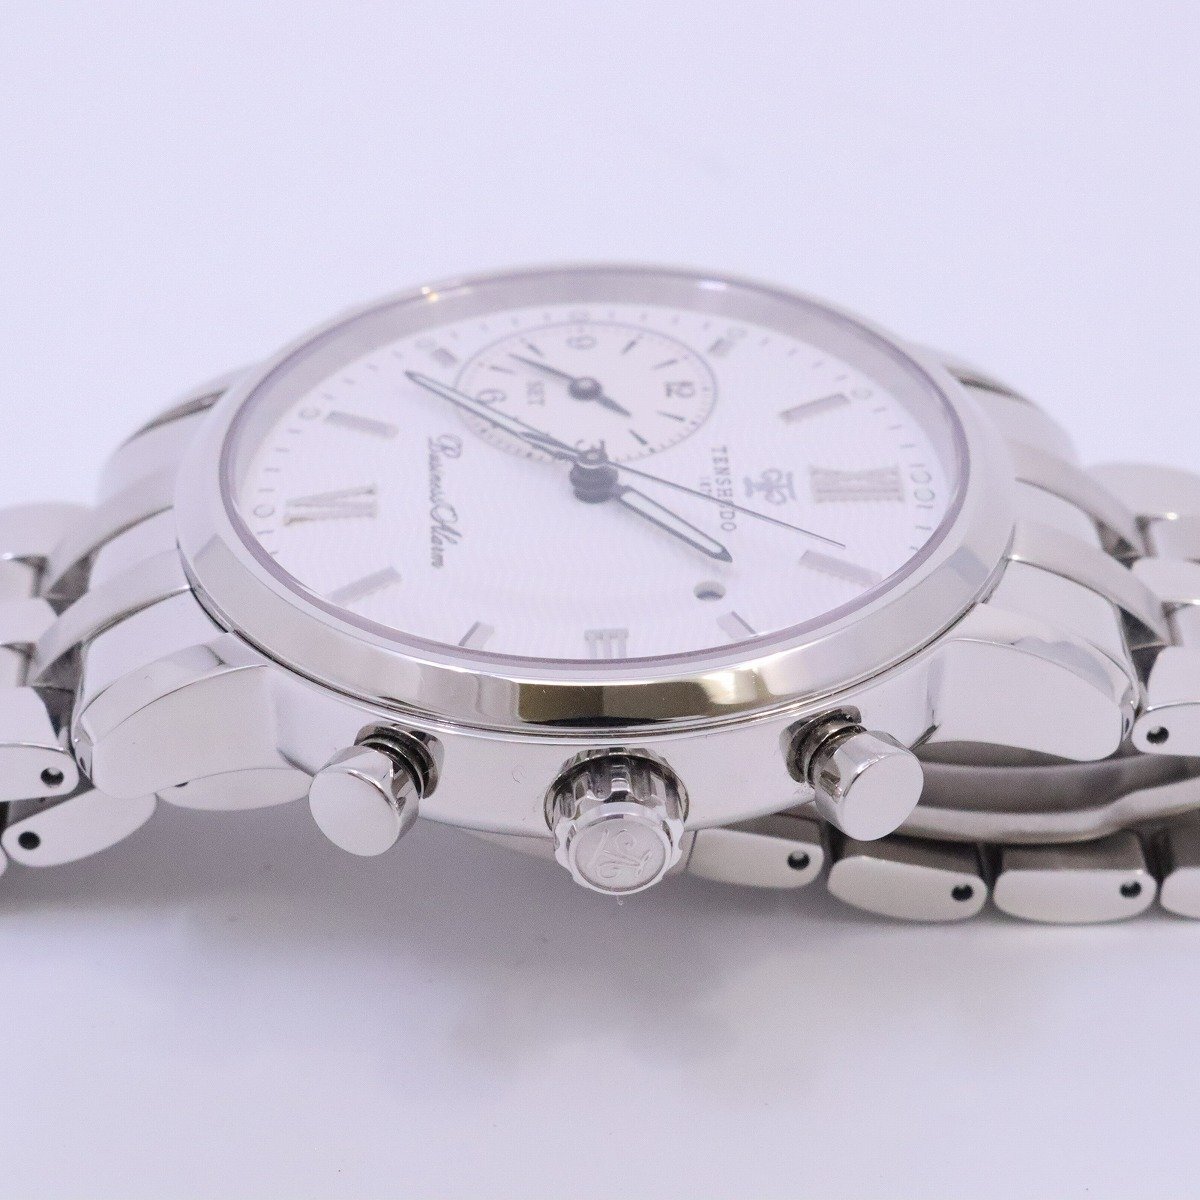 [ goods with special circumstances ] Tenshodo TENSHODO business alarm quartz men's wristwatch white face original SS belt change belt attaching [... pawnshop ]